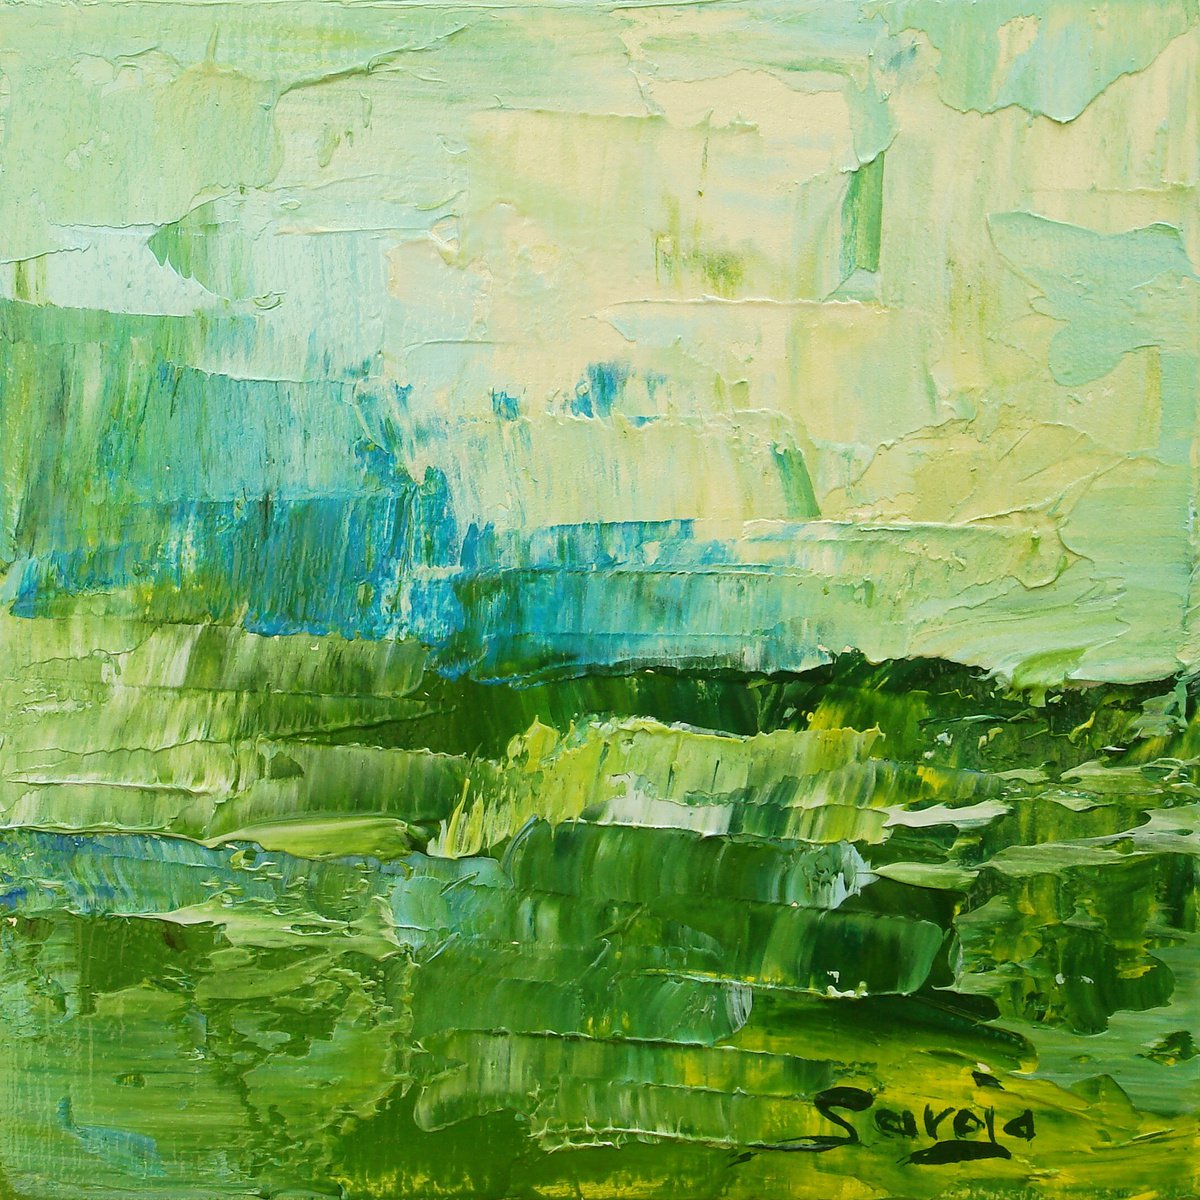 ref#:1152-10Q -10x10cm=3.94x3.94 nfr. Green landscape 2 by Saroja La Colorista